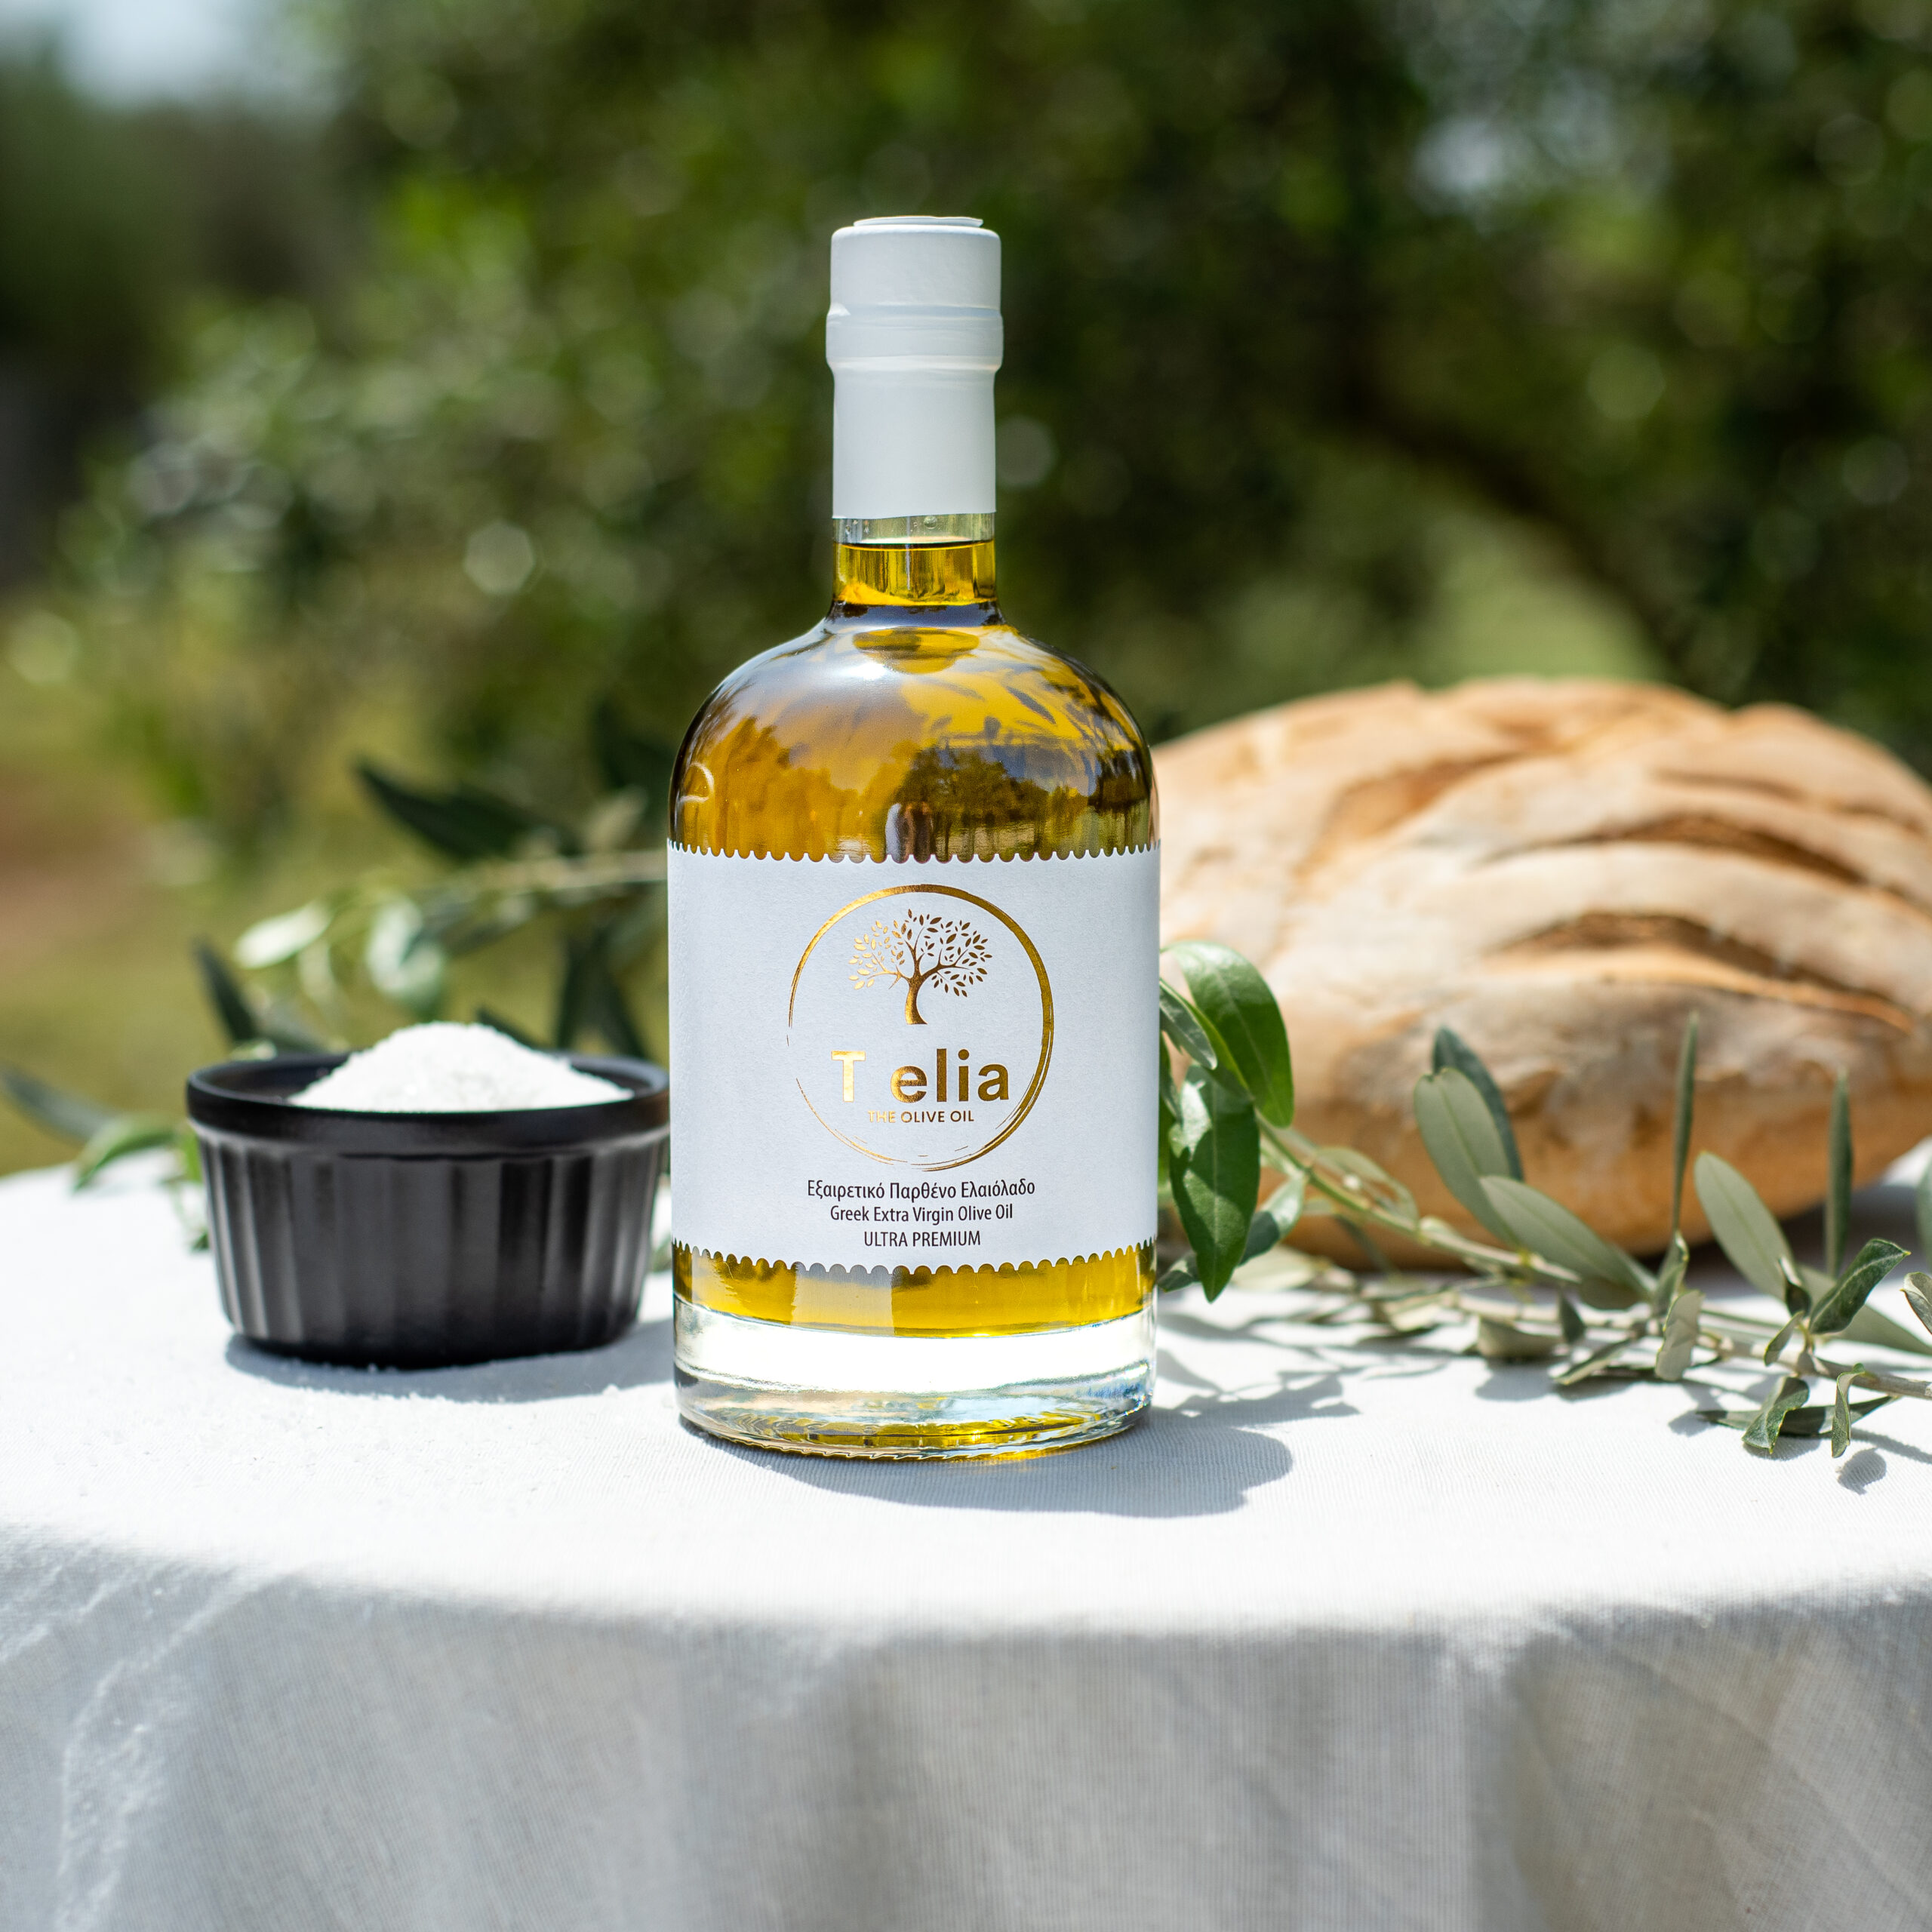 Telia olive oil